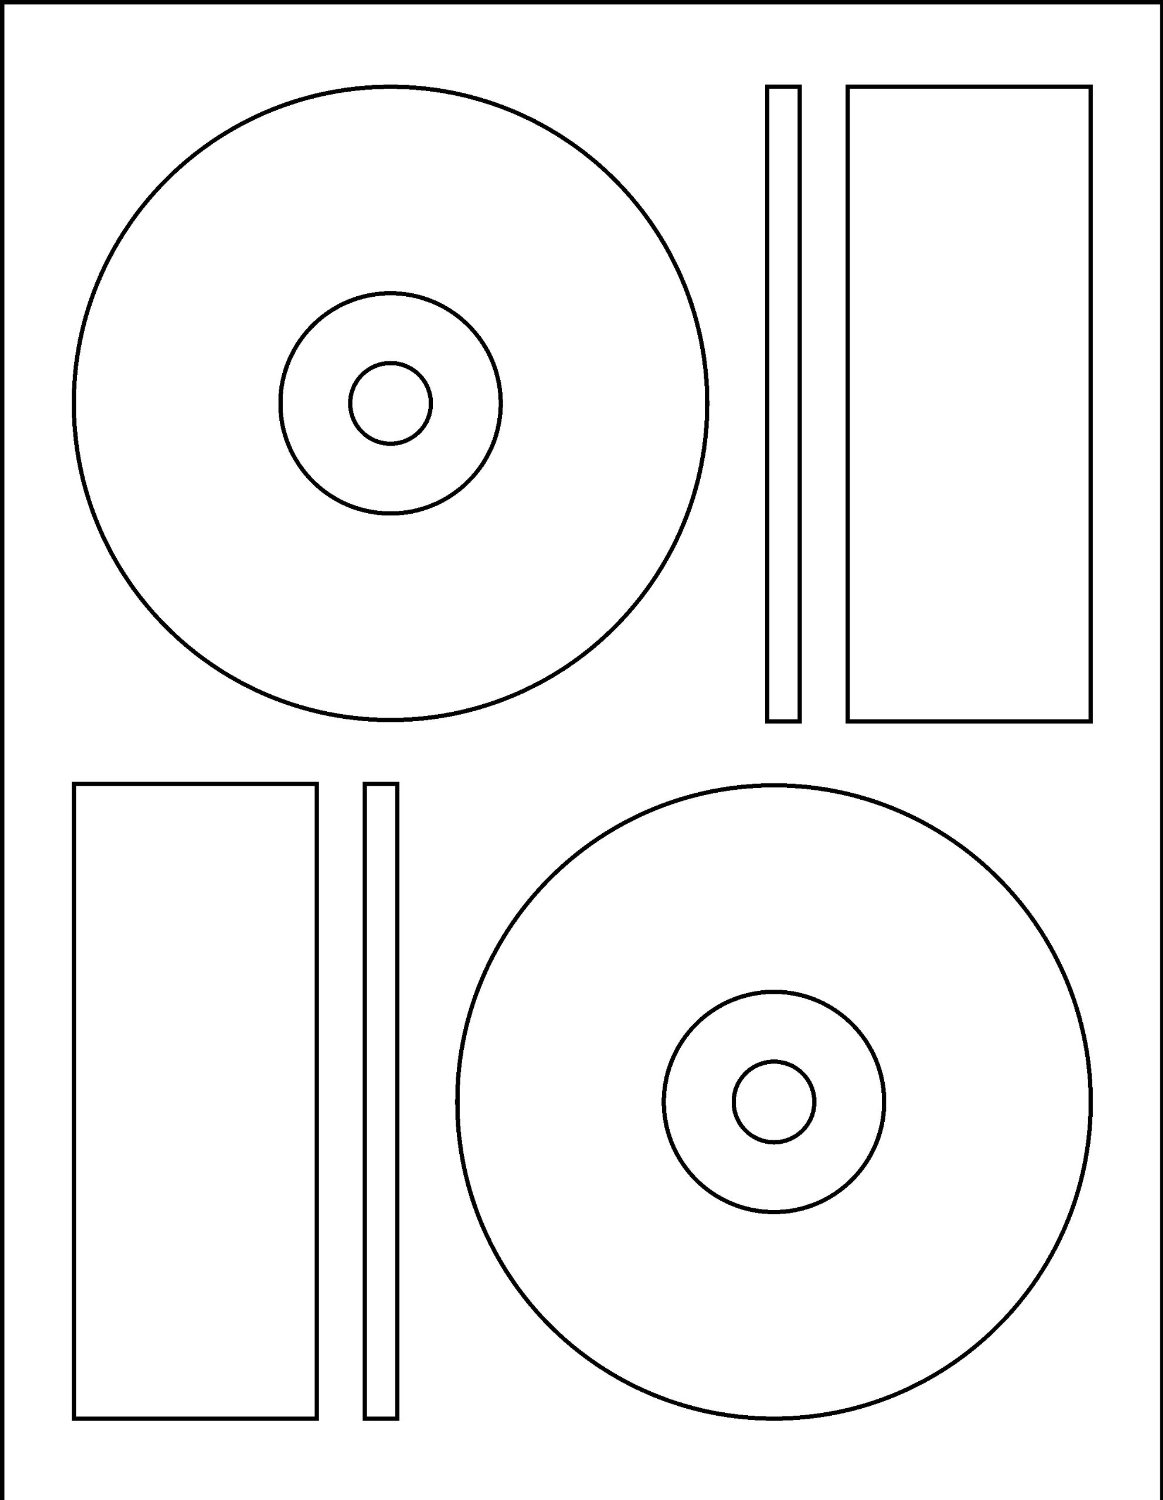 23 Memorex CD Label PSD Template Images - Memorex CD DVD Label In Cd Label Template Word 2010